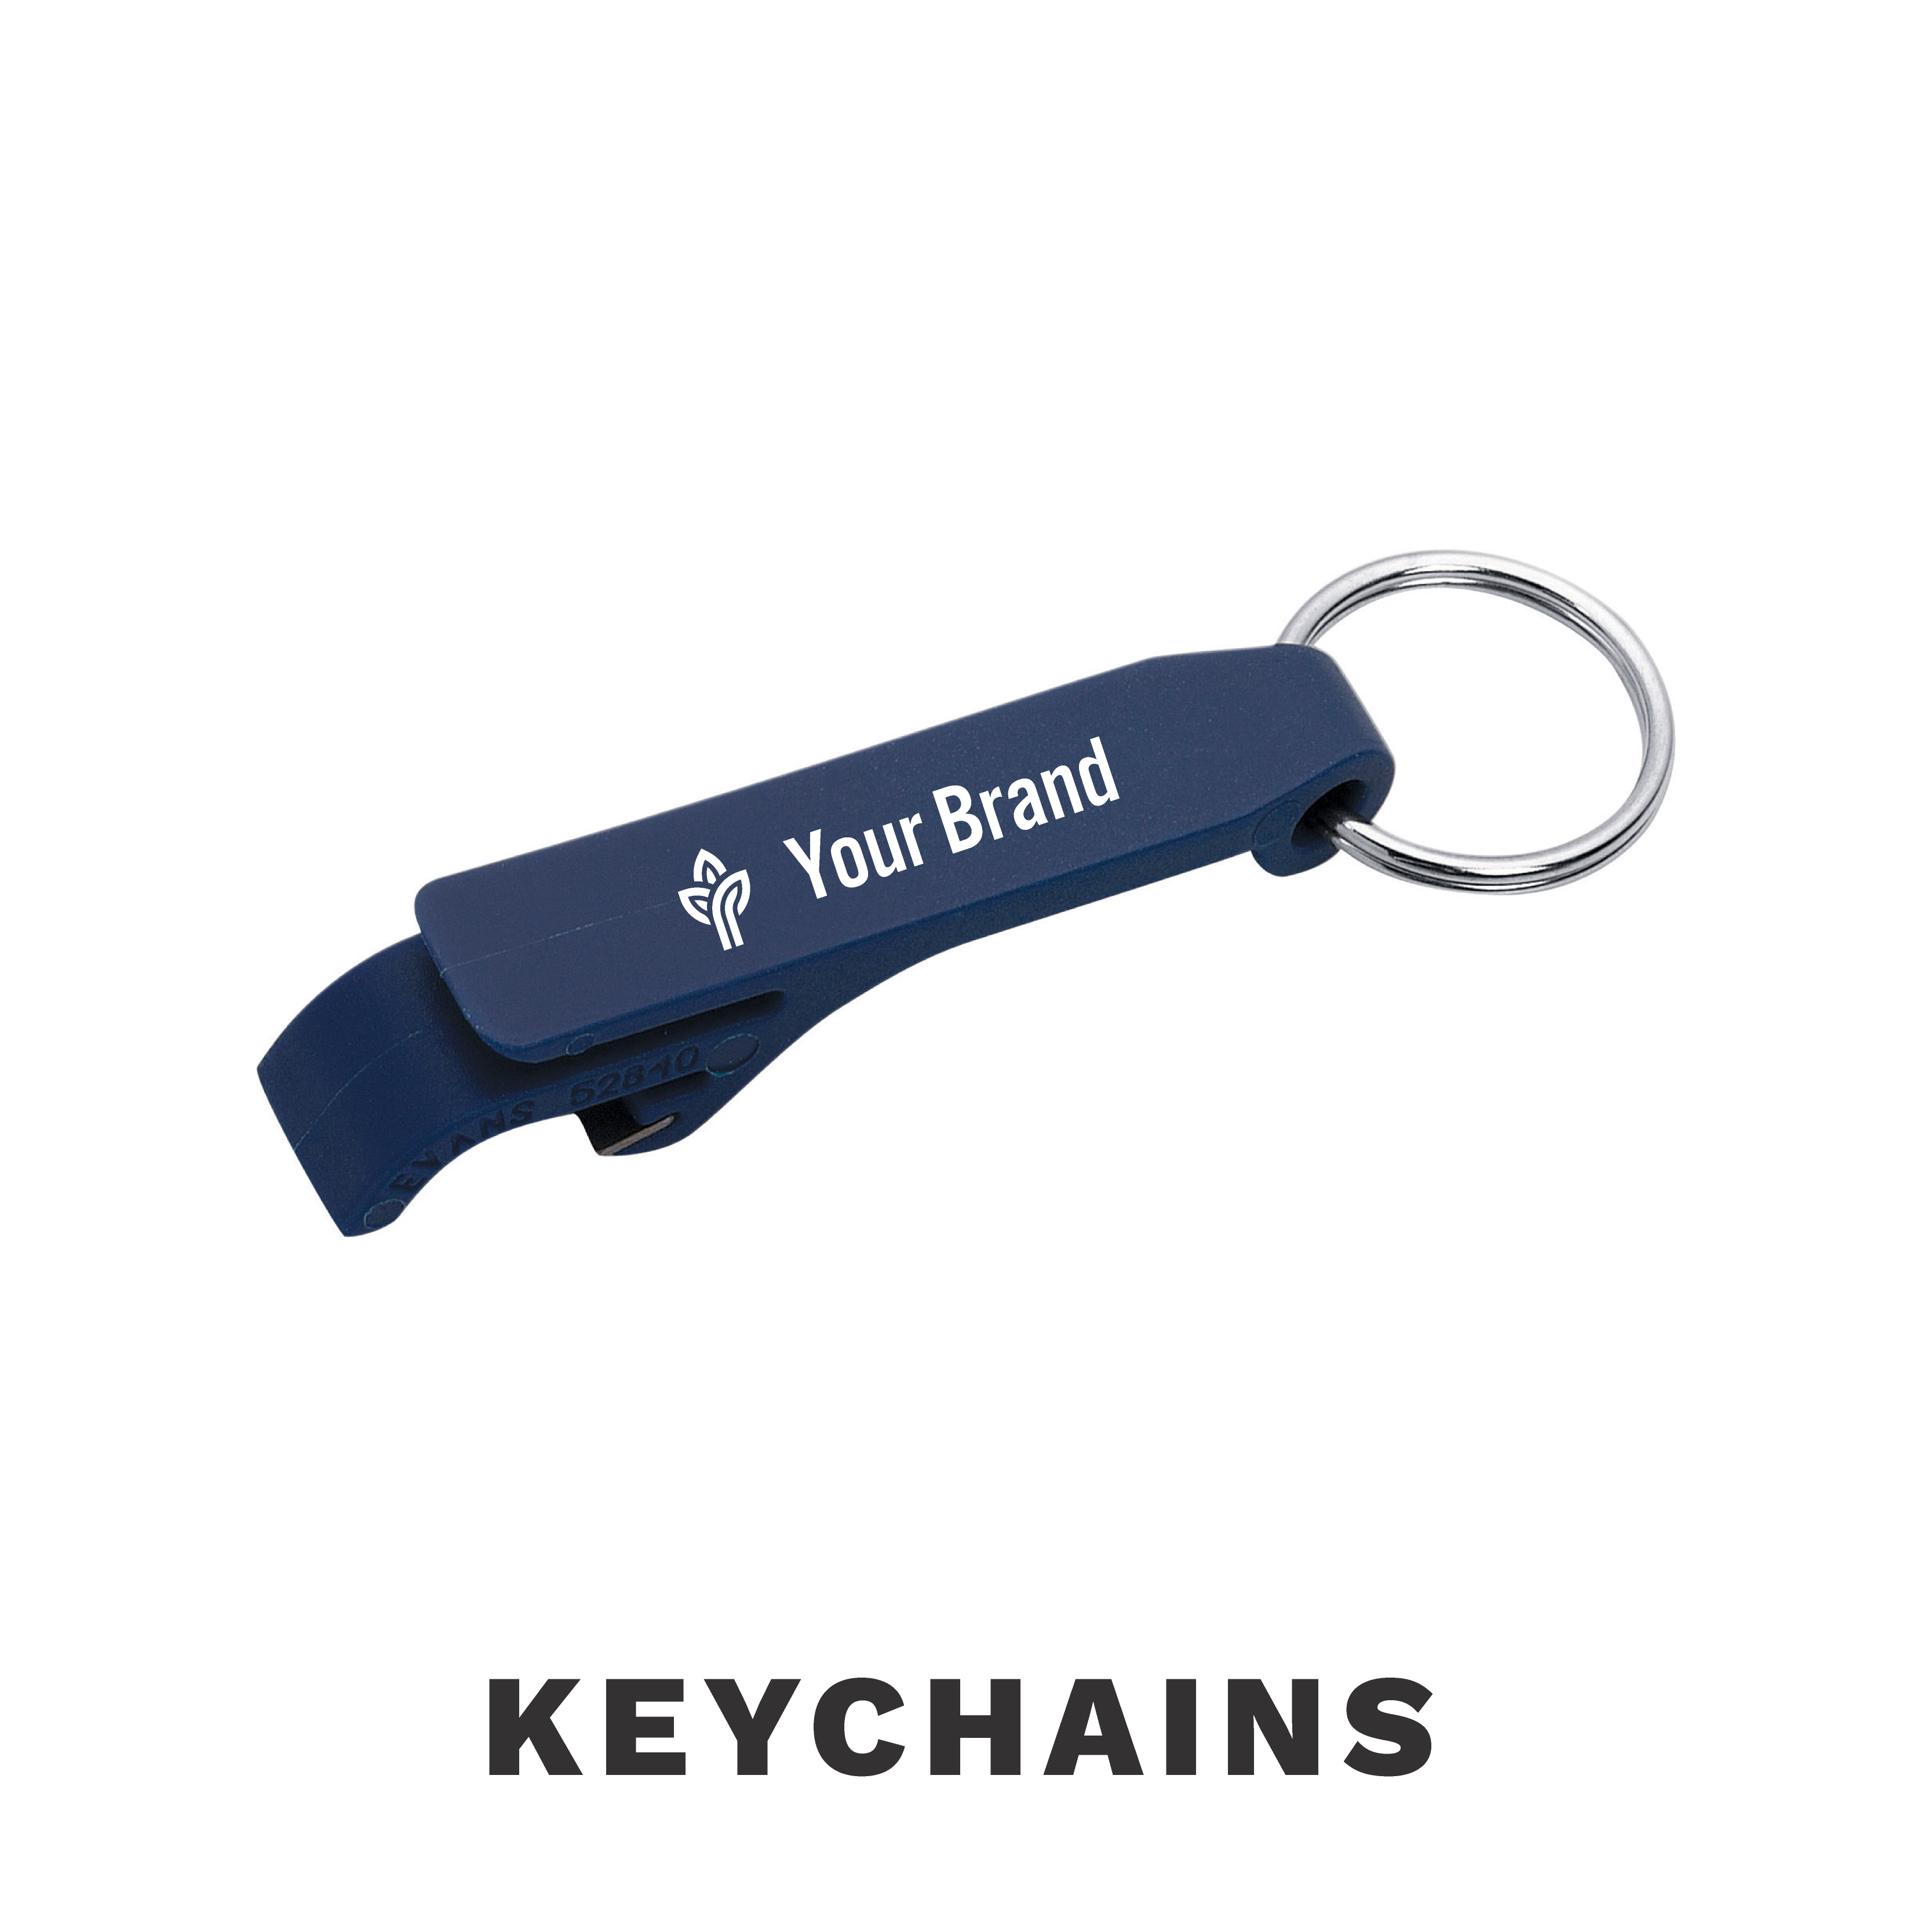 Your brand keychain